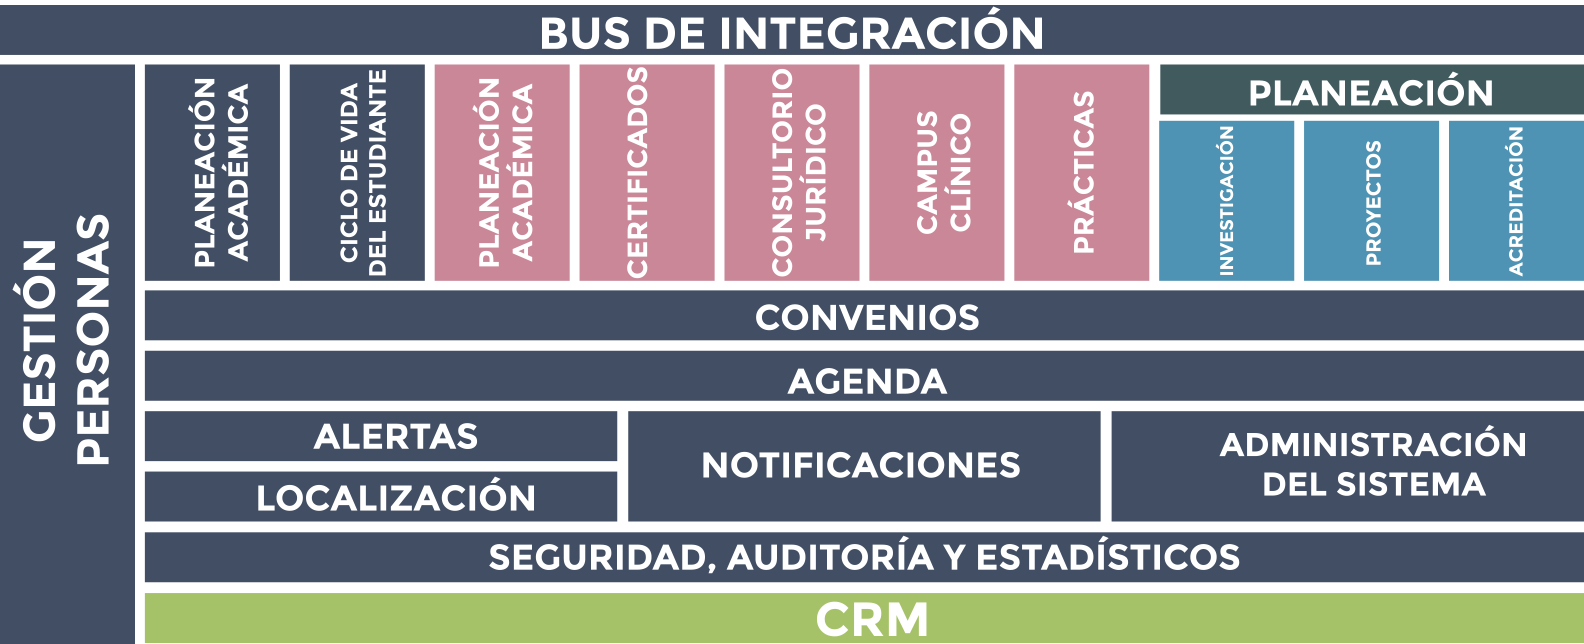 bus-integracion